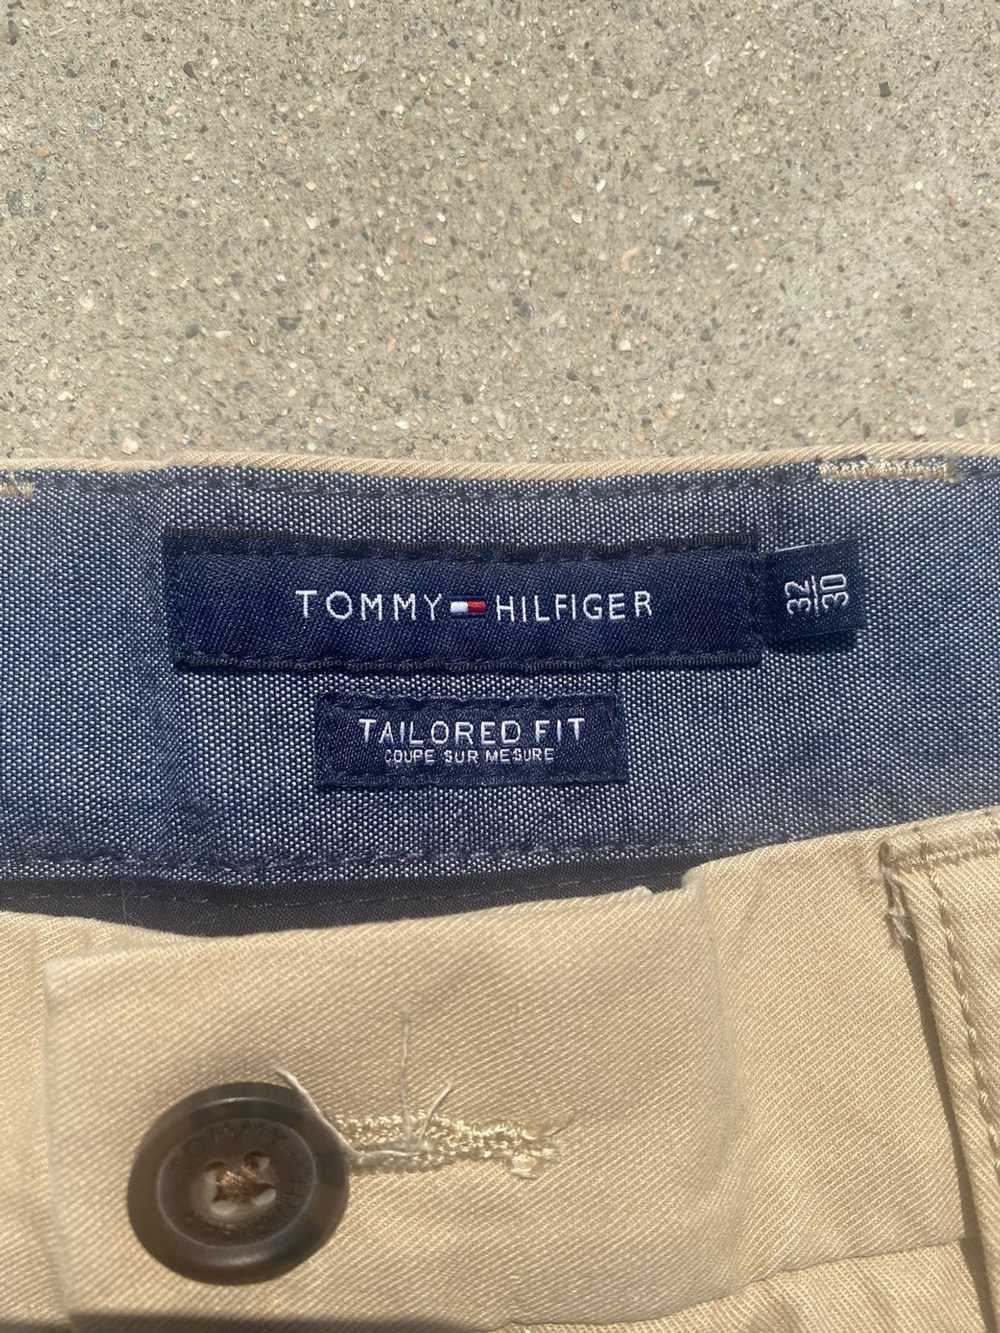 Tommy Hilfiger Tommy Hilfiger Tailored Fit pants … - image 2